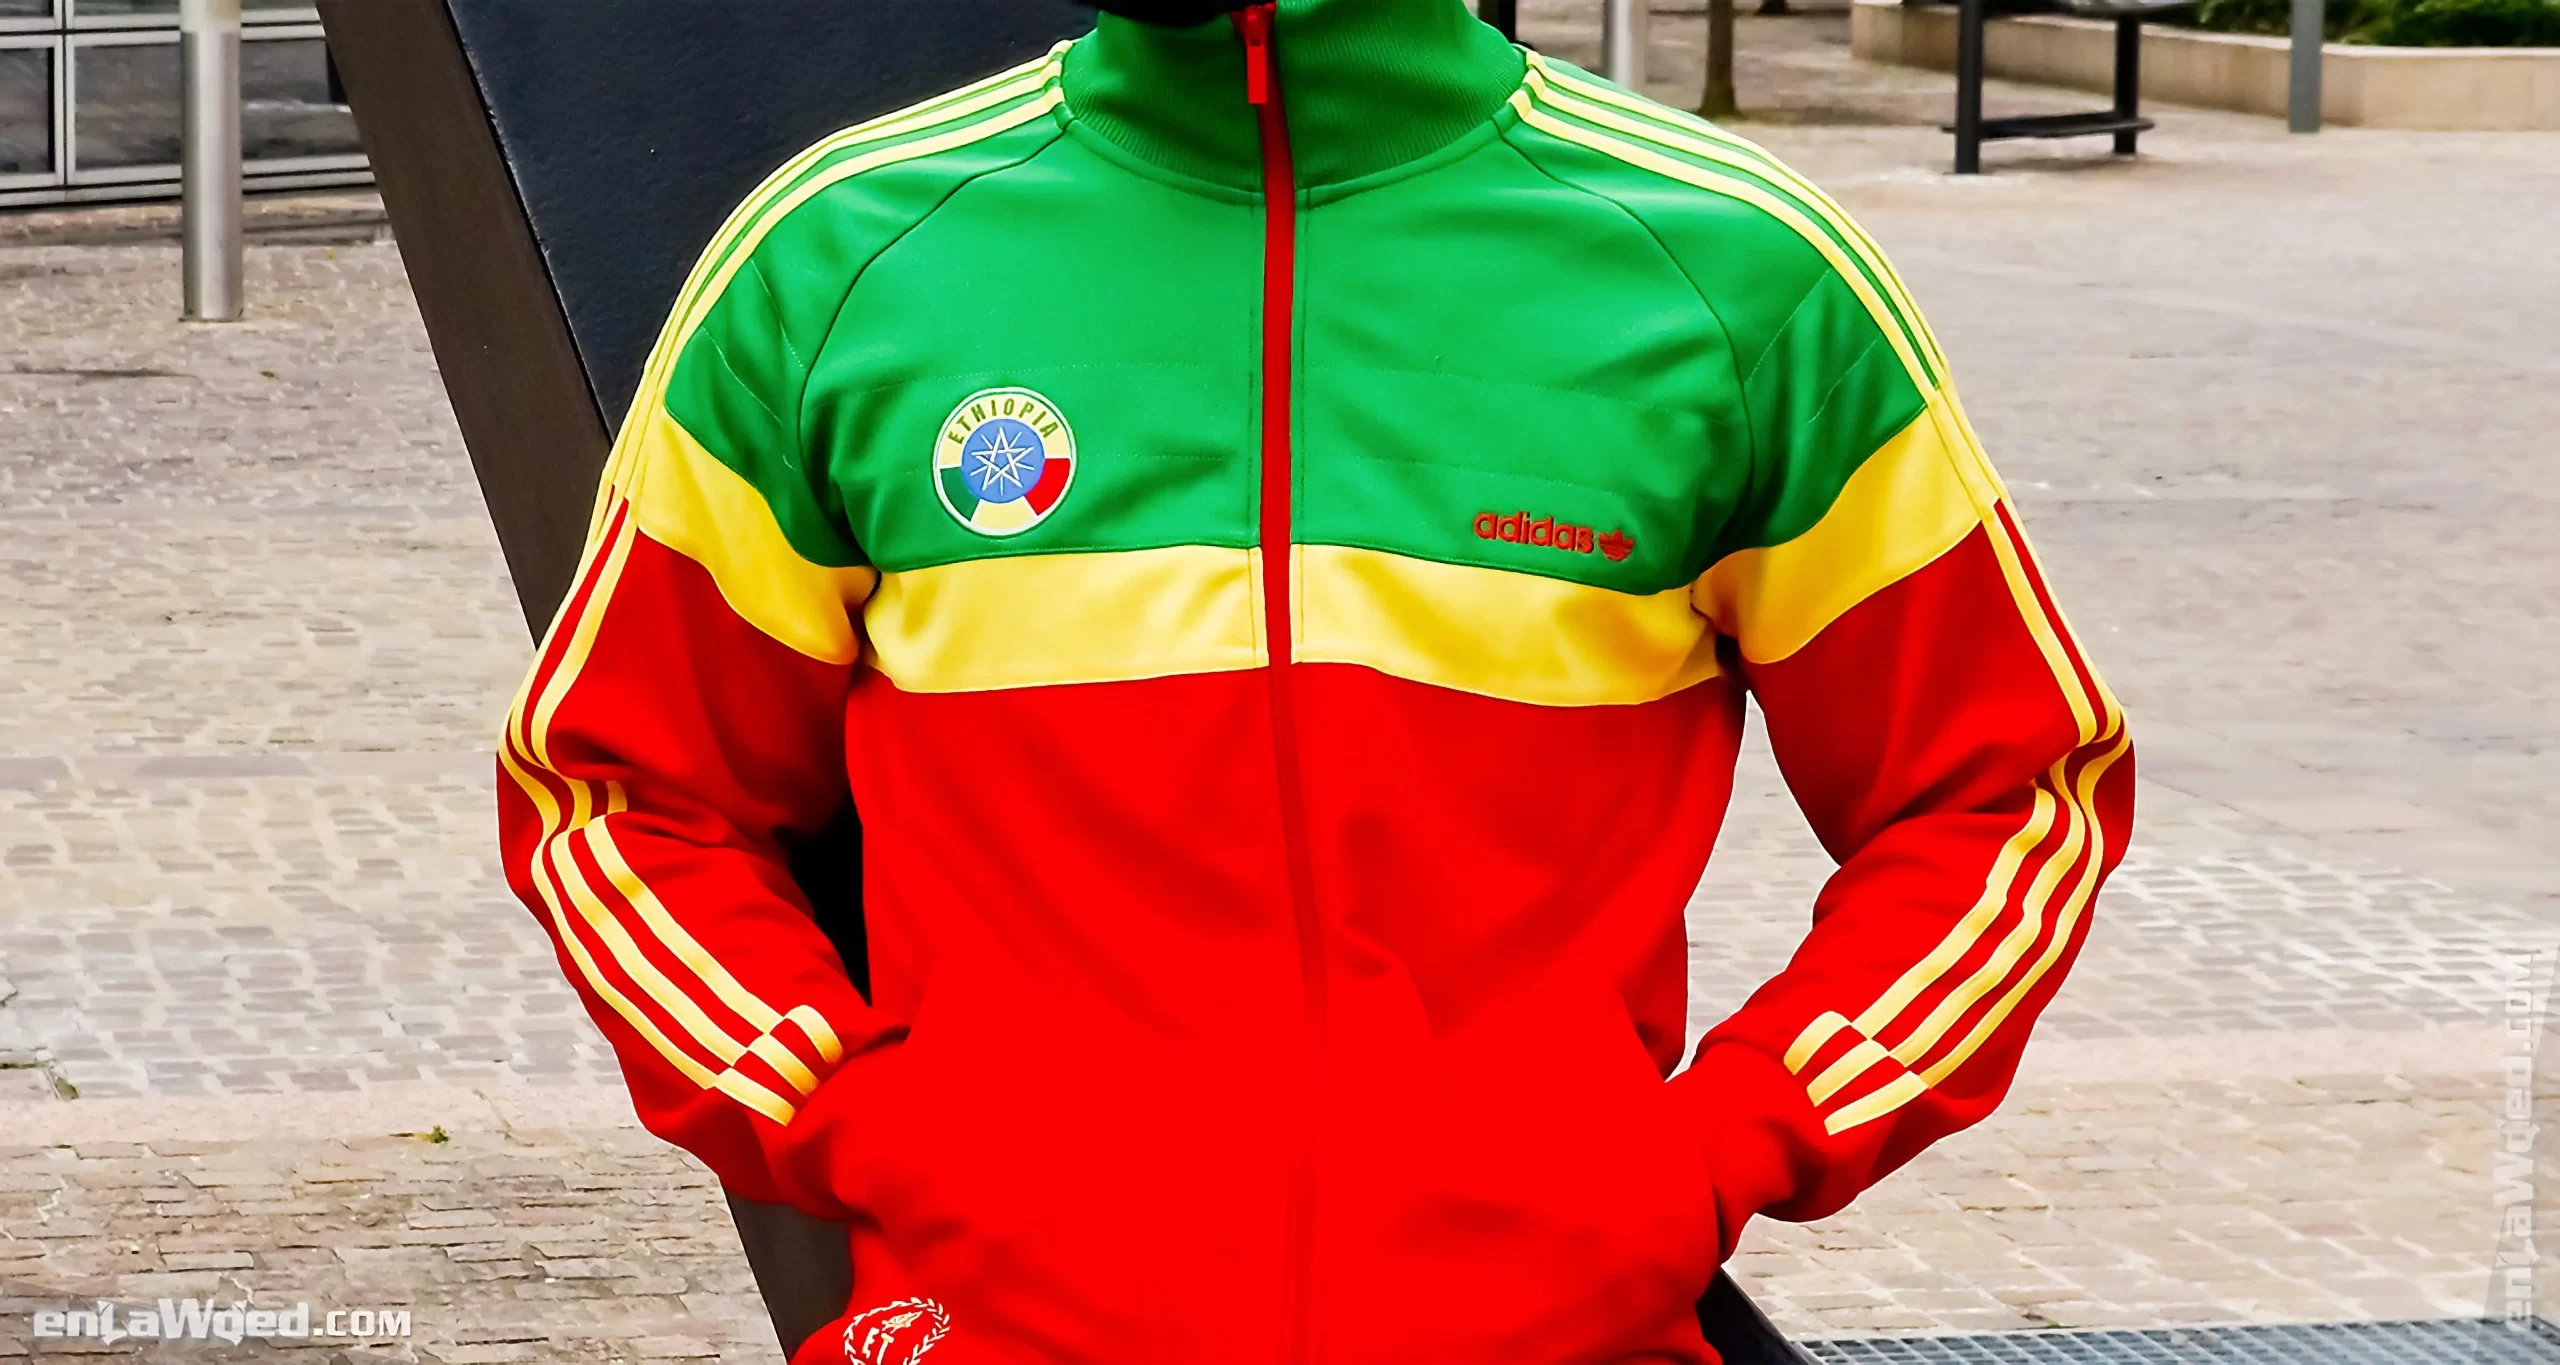 Men's 2008 Ethiopia Track Top by Adidas Originals: Masterclass (EnLawded.com file #lmchk89709ip2y121467kg9st)